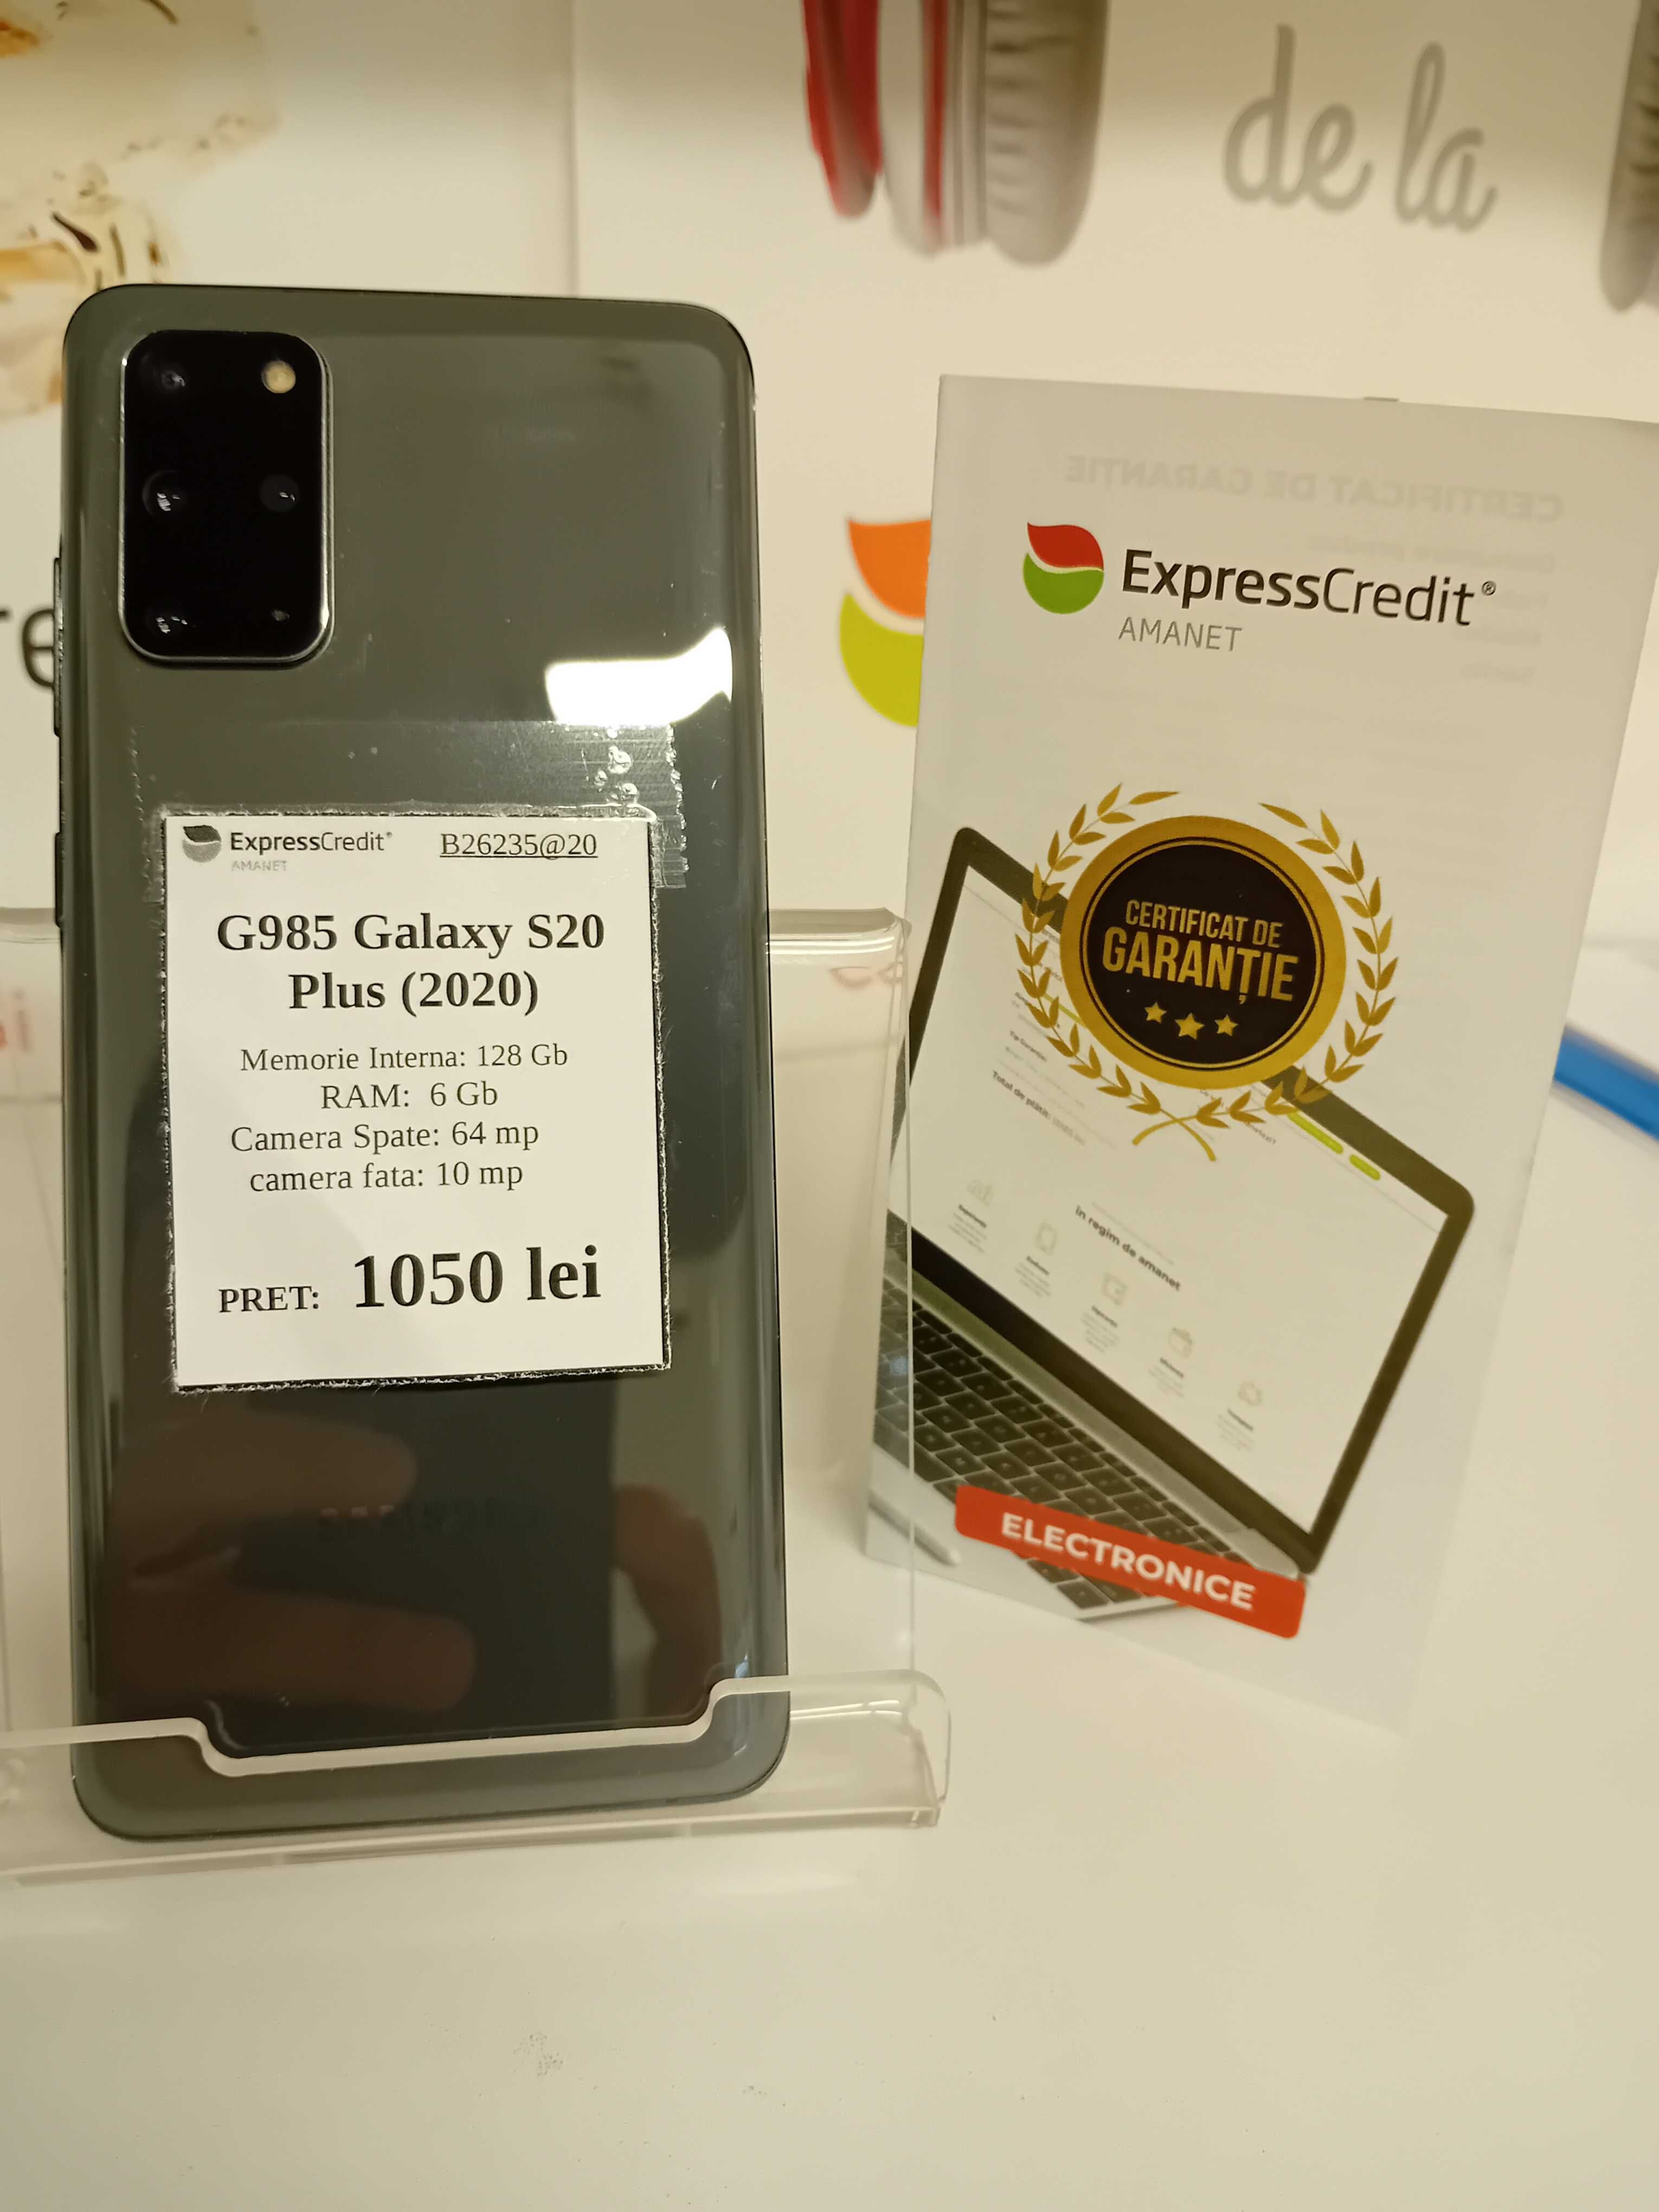 Telefon Samsung G985 Galaxy S20 Plus (2020) [AG20 Dancu b26235*20]